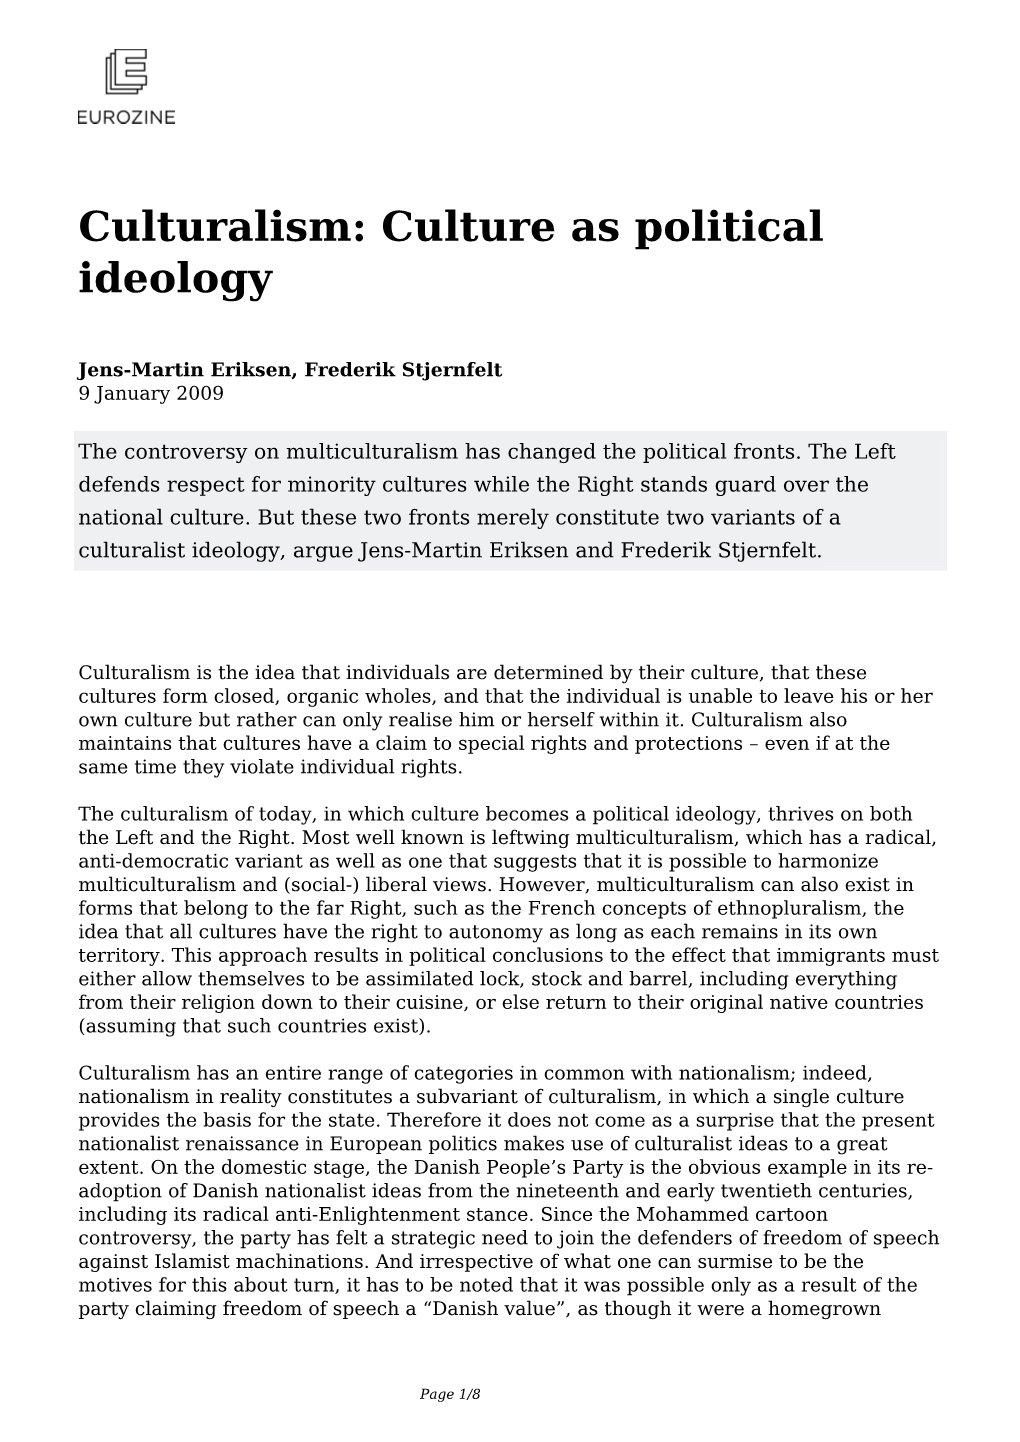 Culturalism: Culture As Political Ideology